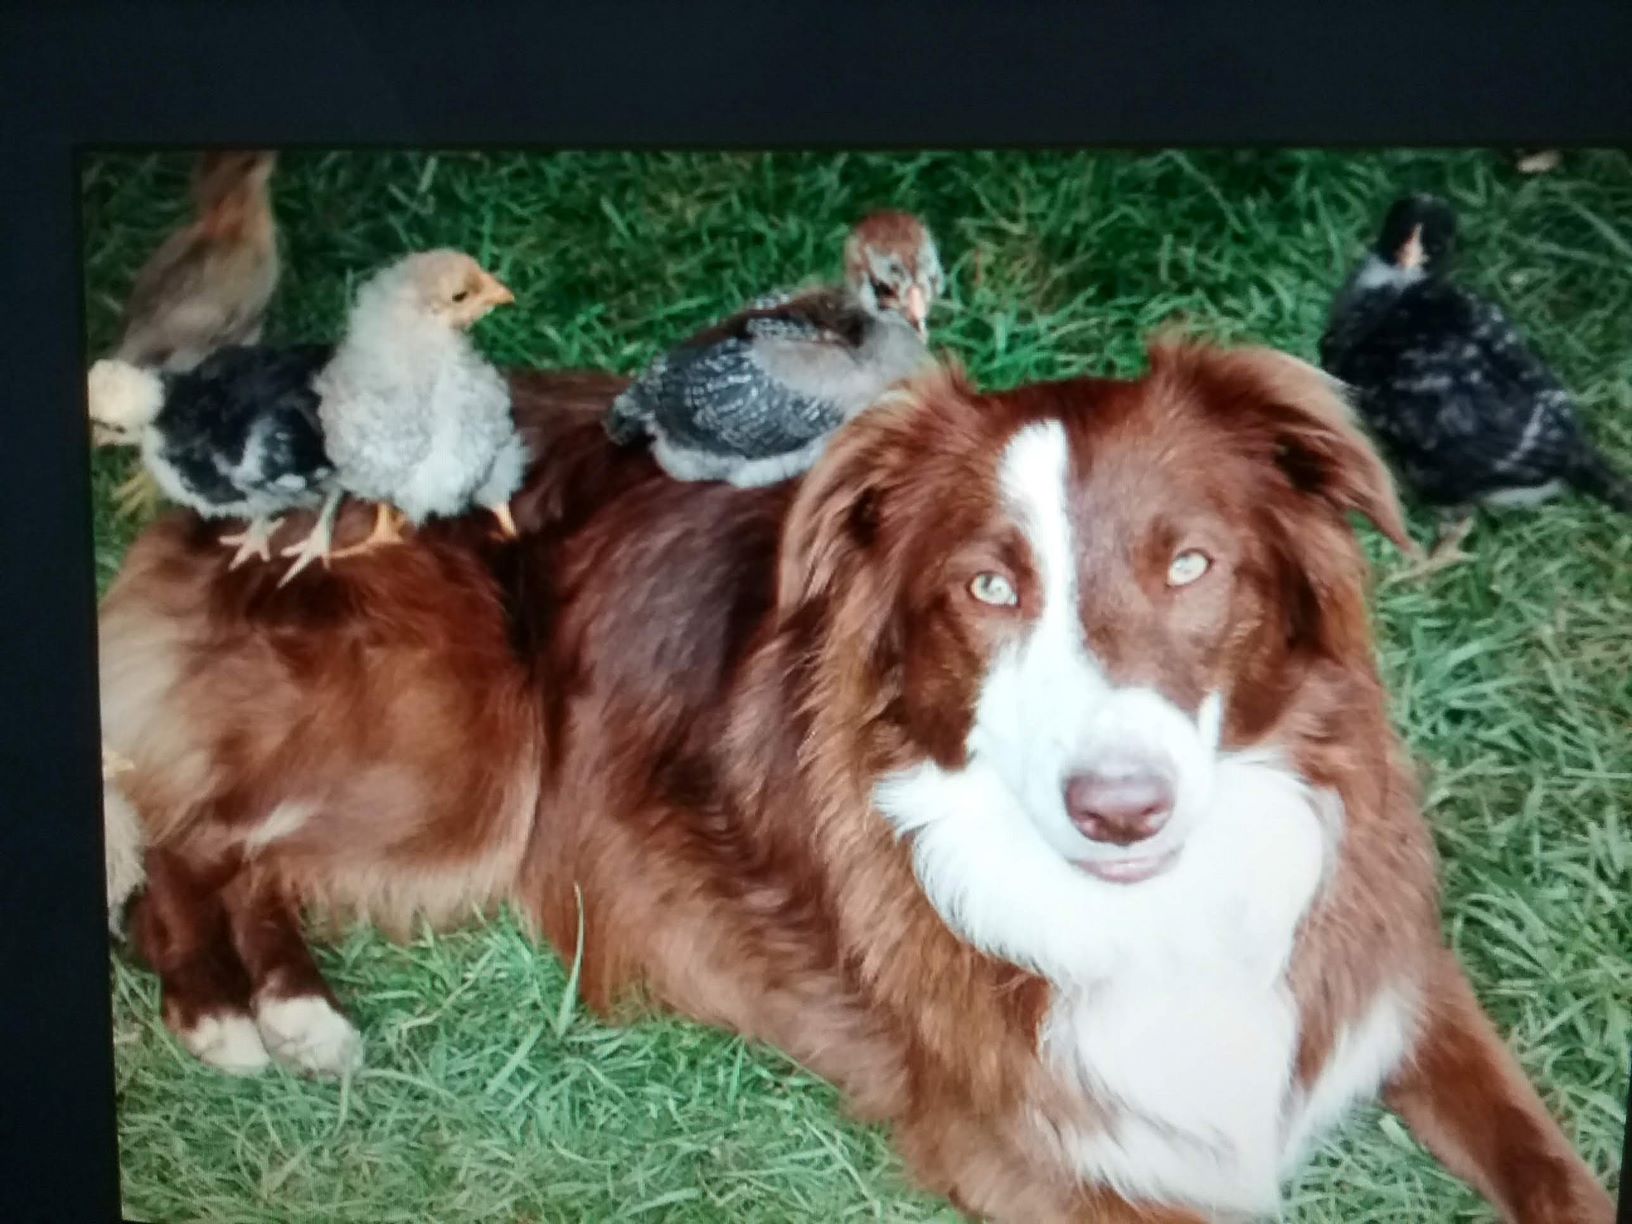 Chloe Holiday's Mothers Day post: Australian shepherd dog guards baby chicks